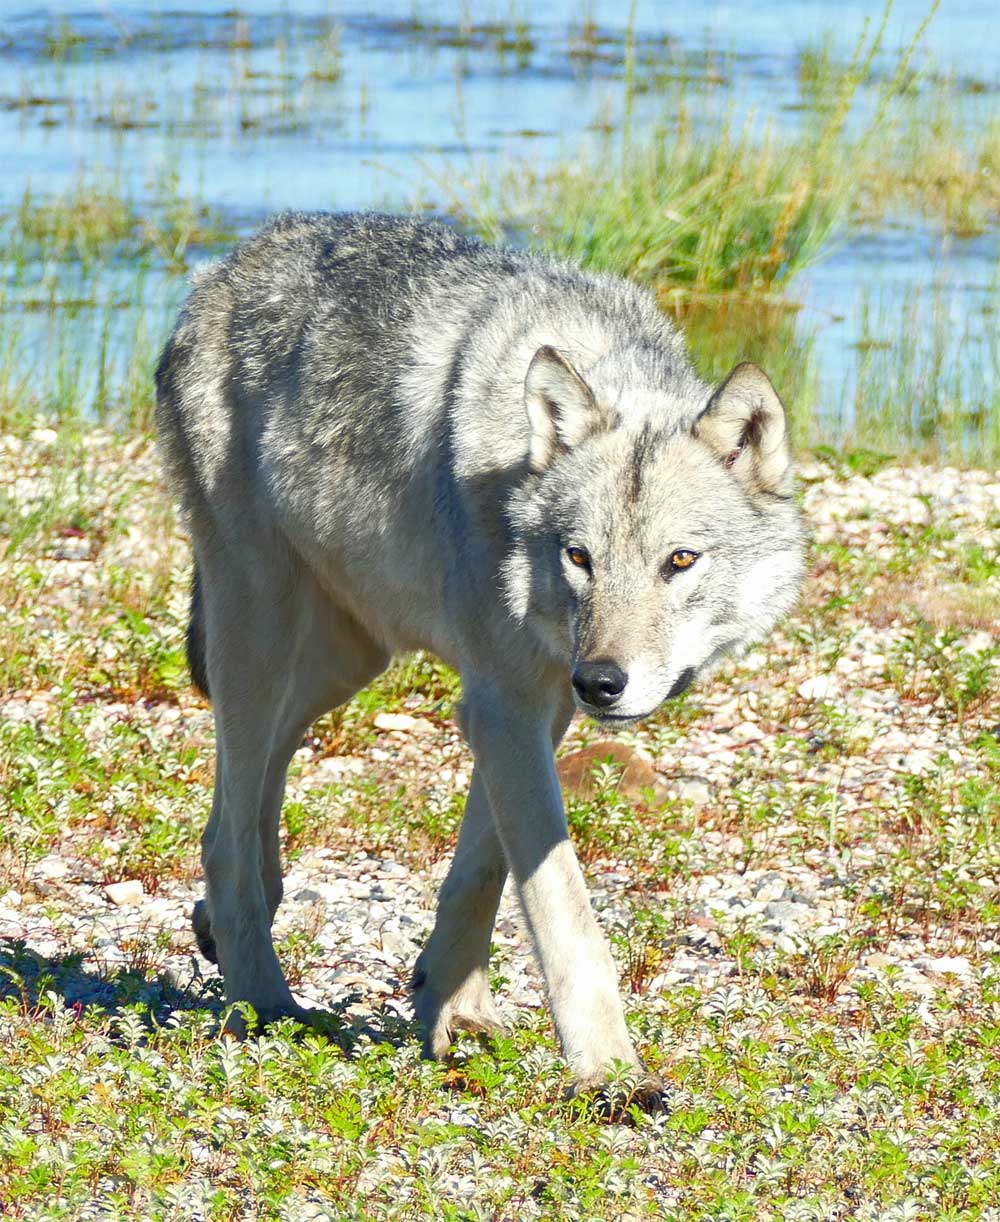 Wolf at Nanuk Polar Bear Lodge featured in Wildlife SOS newsletter. Mary Nicolini photo.